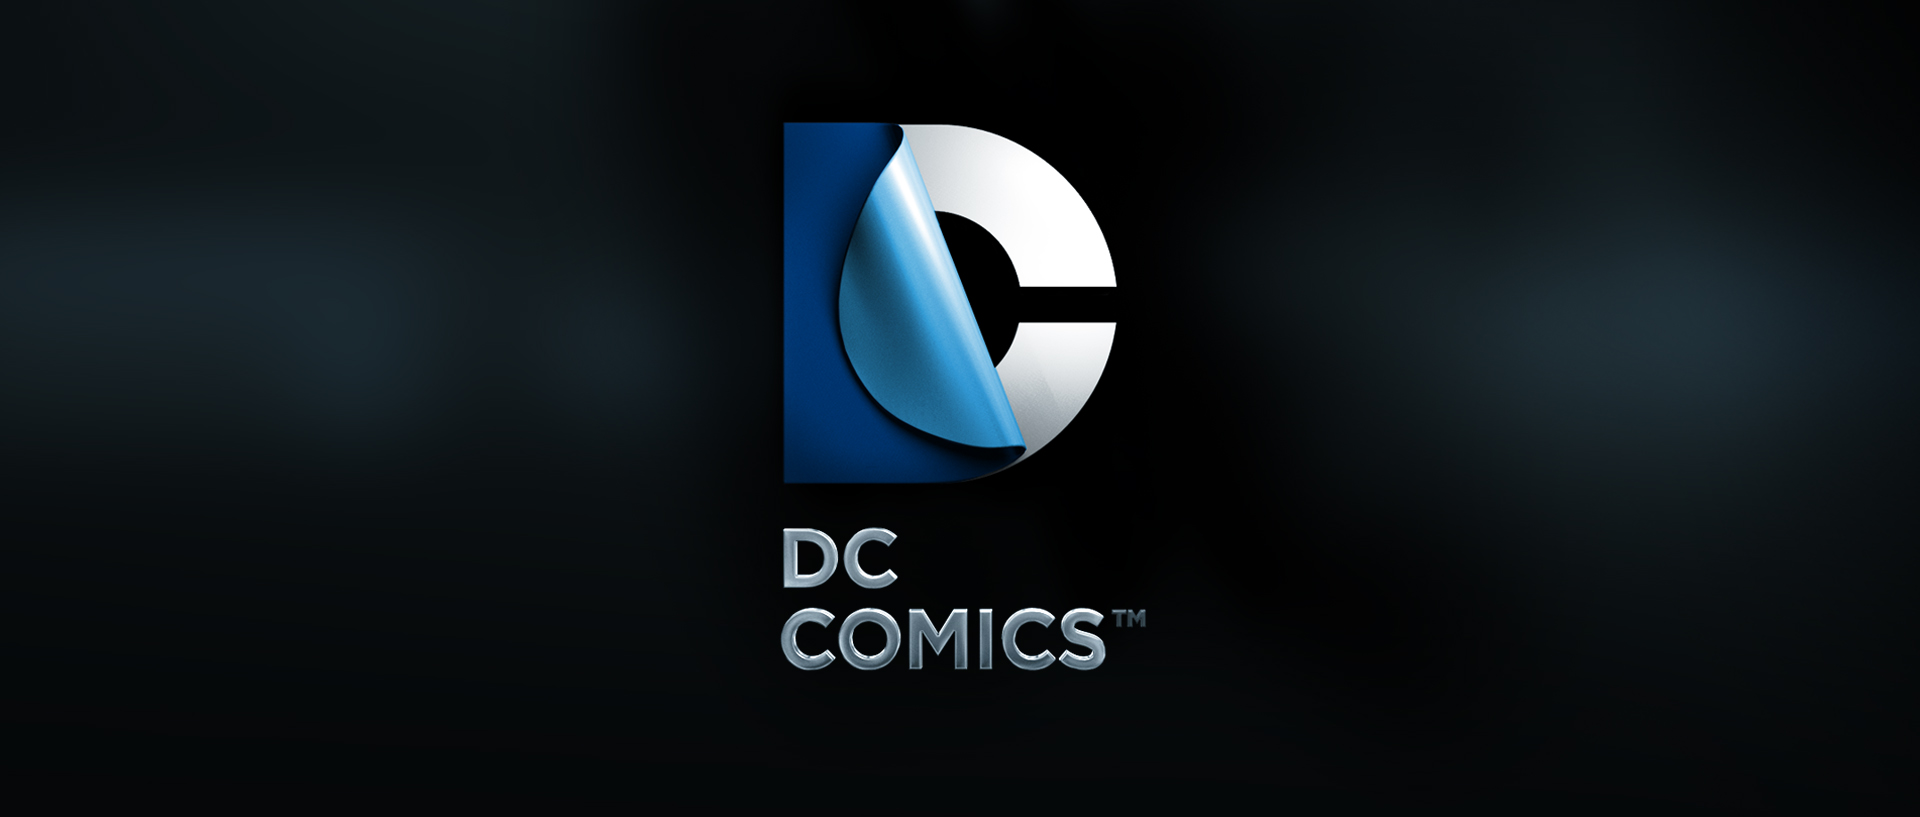 dc-comics-logo-cinema